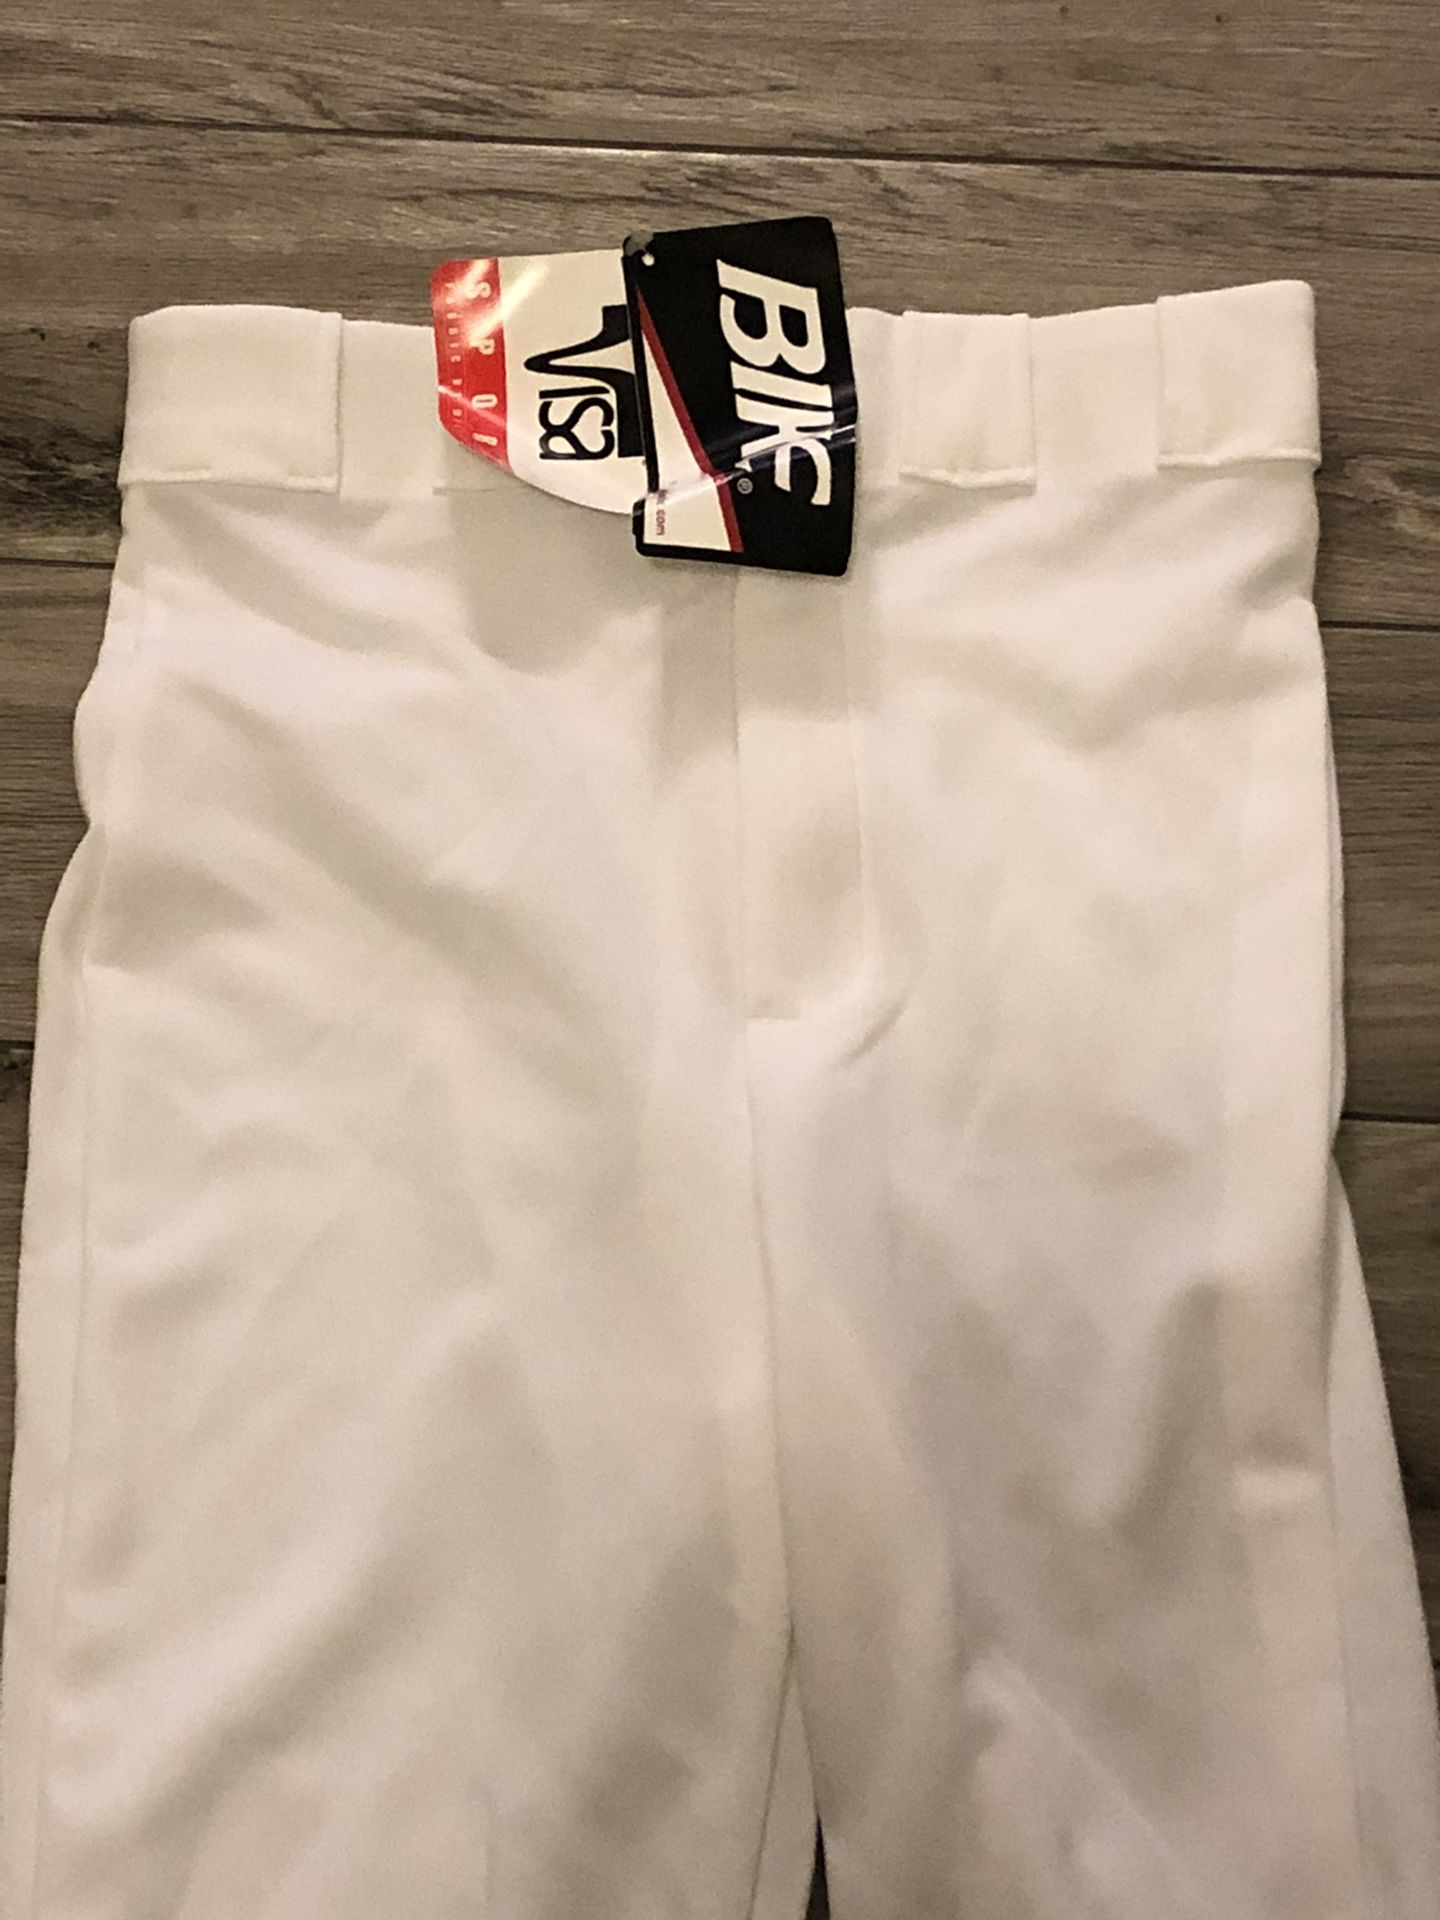 Bike Athletic Style 4108 White Adult Baseball Pants w/Belt Loops Size Small NEW